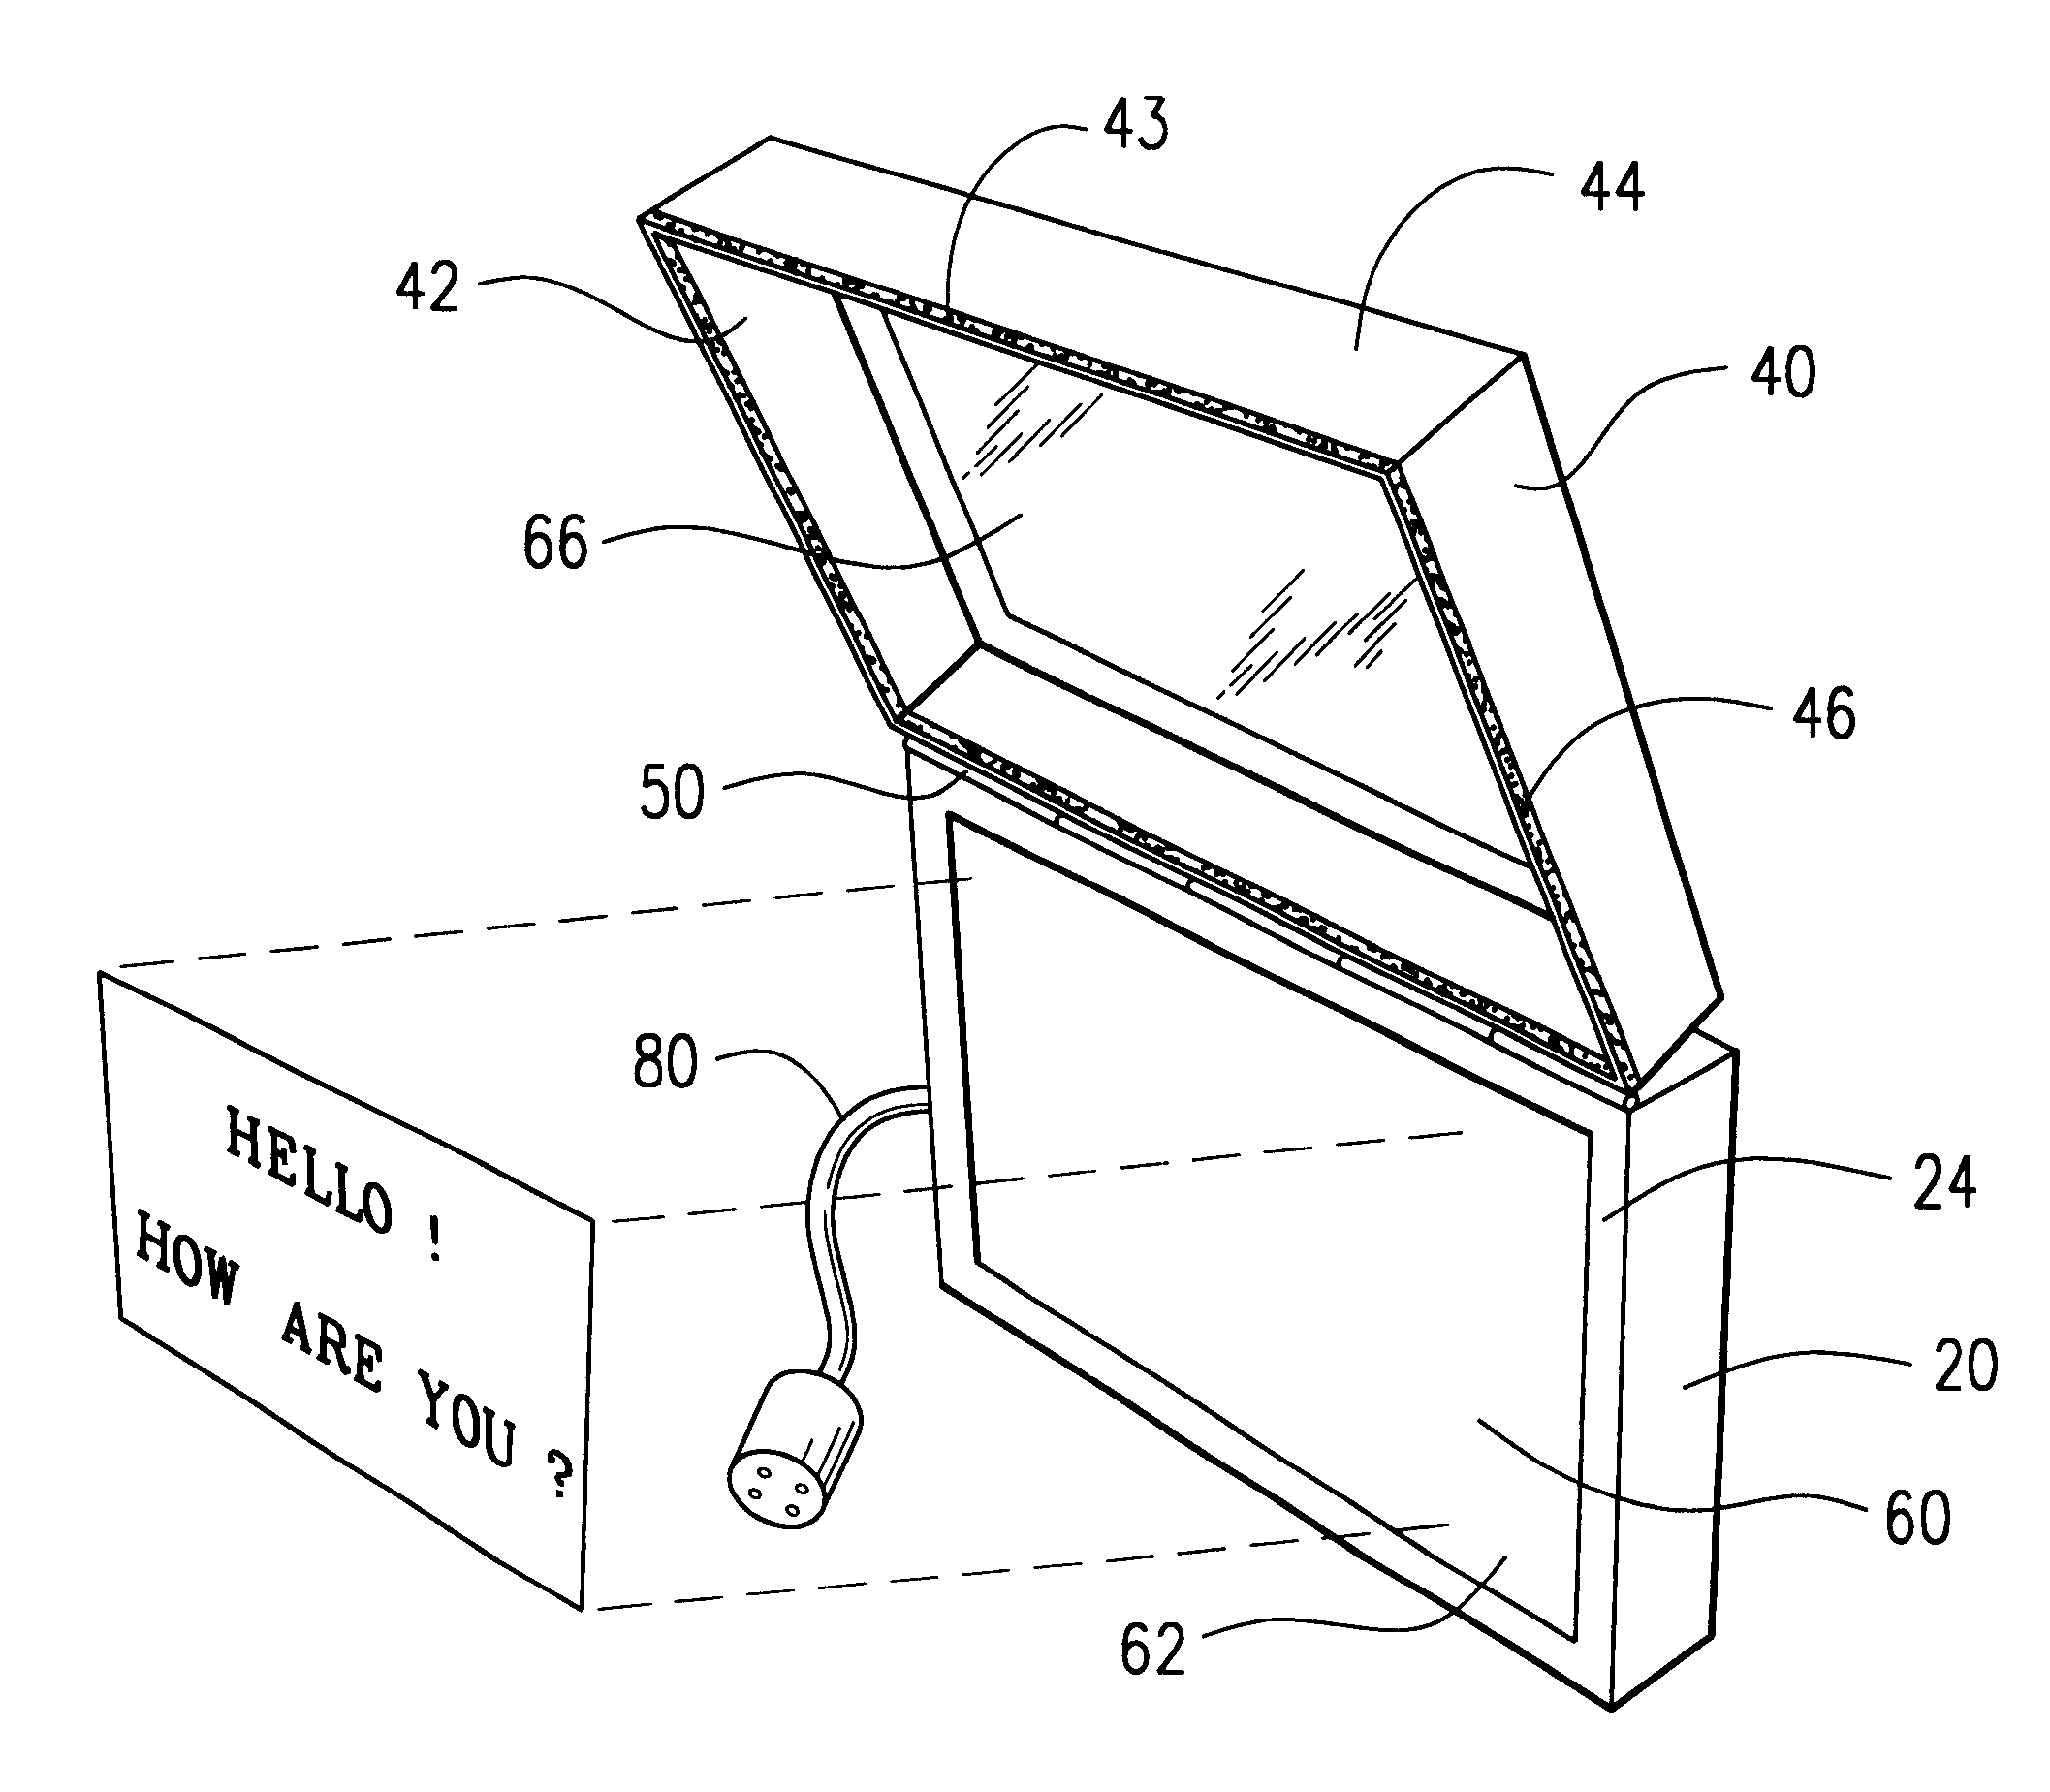 Backlit display apparatus